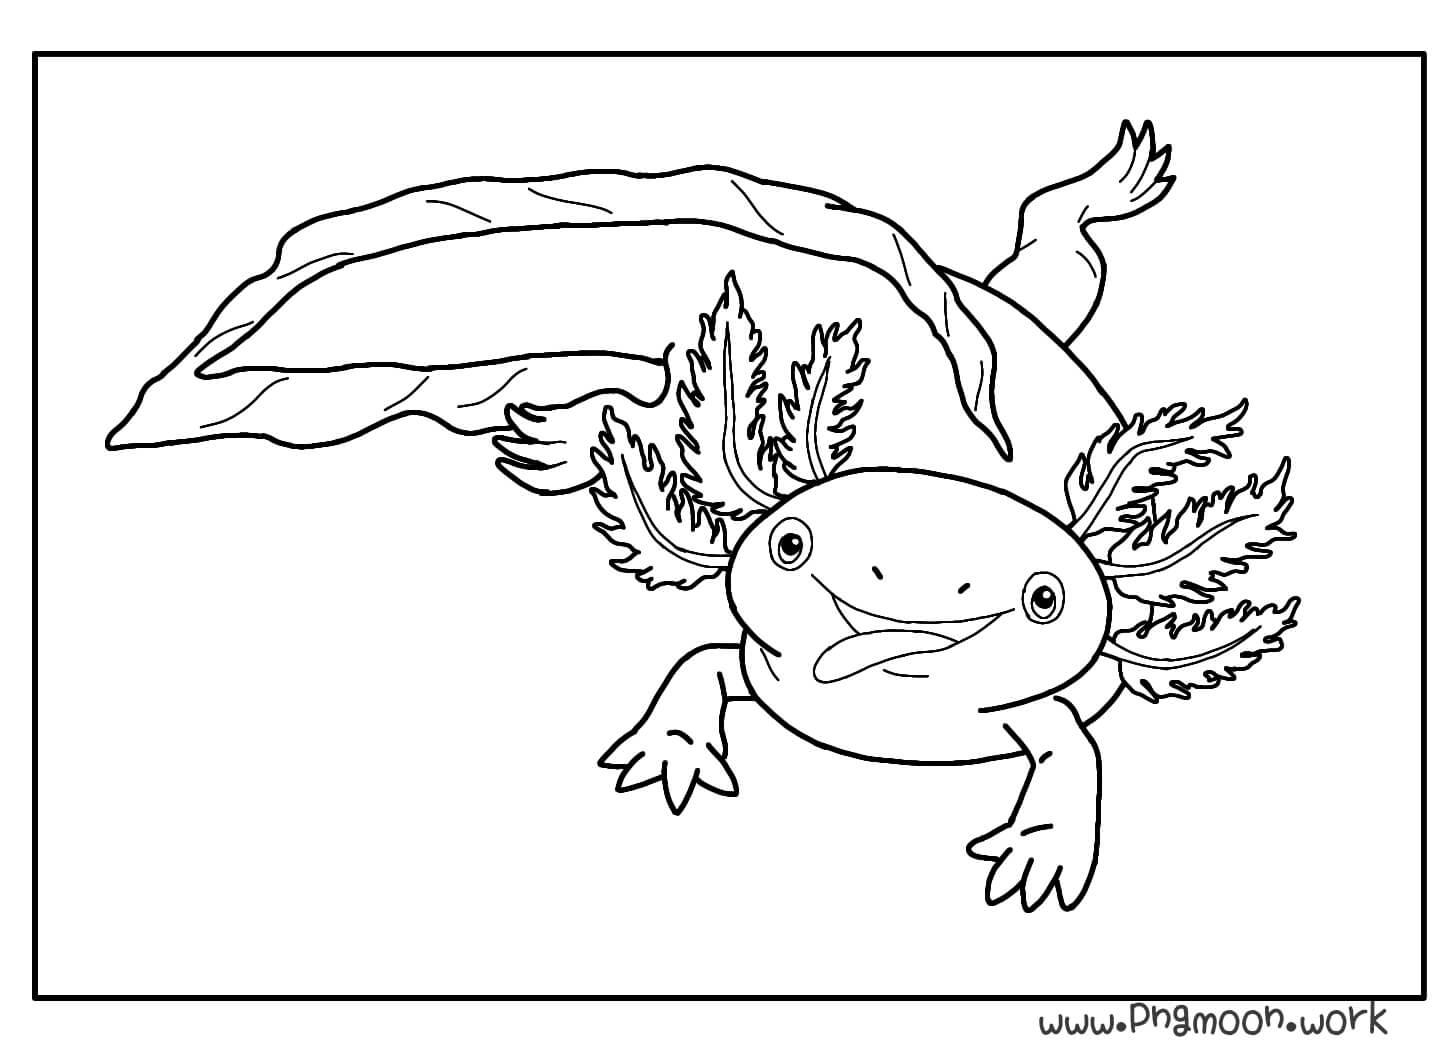 Axolotl Coloring Page  Cartoon Axolotl  Pngmoon   Pngmoon  PNG ...